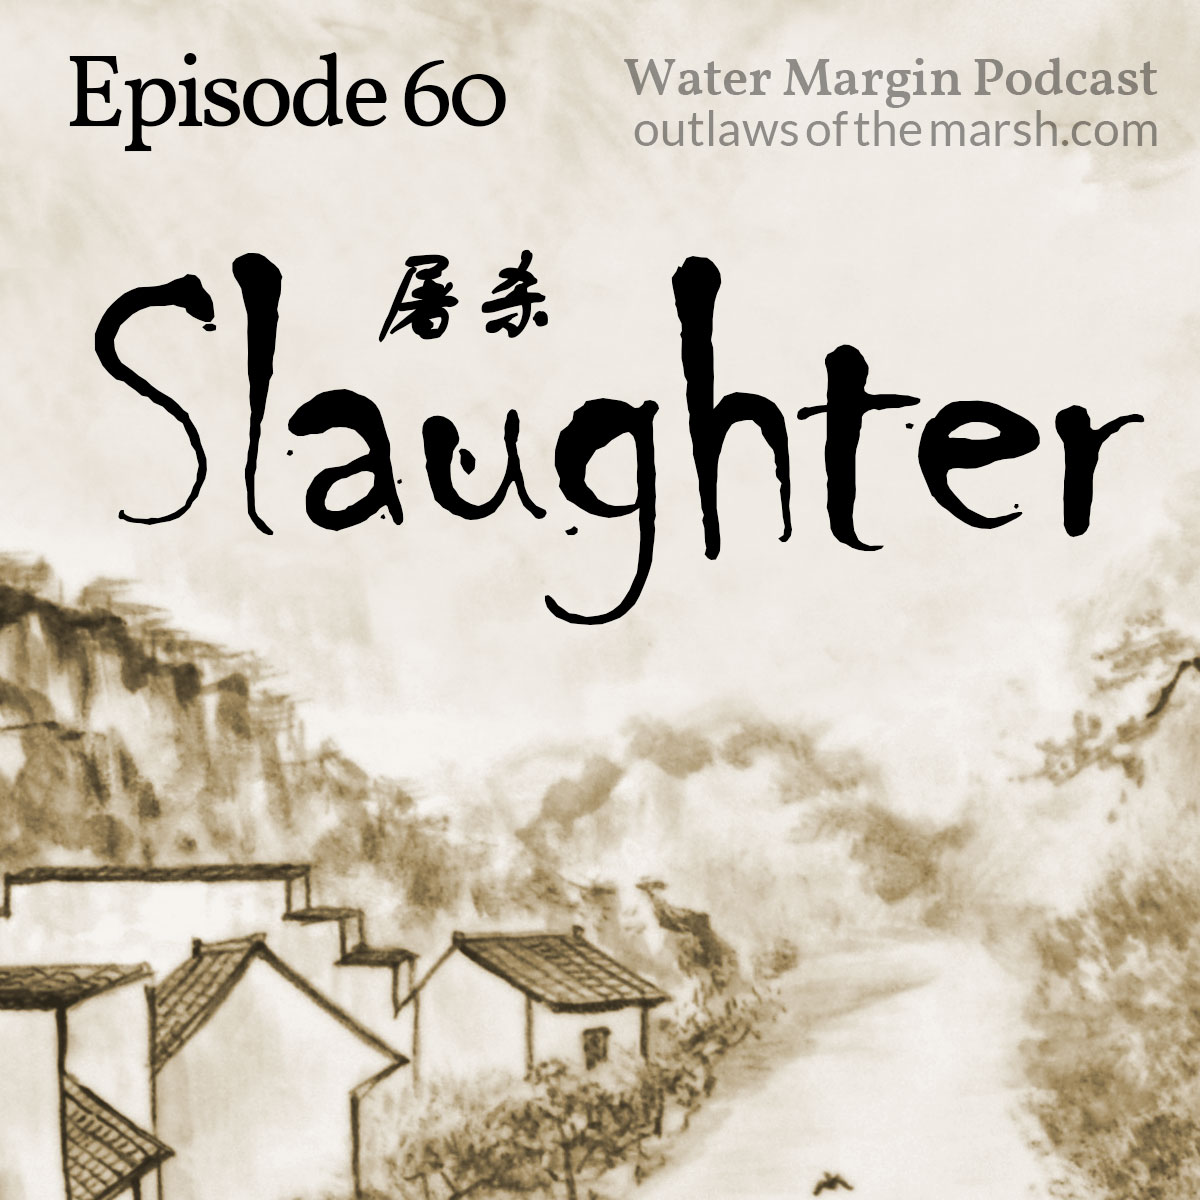 Water Margin Podcast: Episode 060